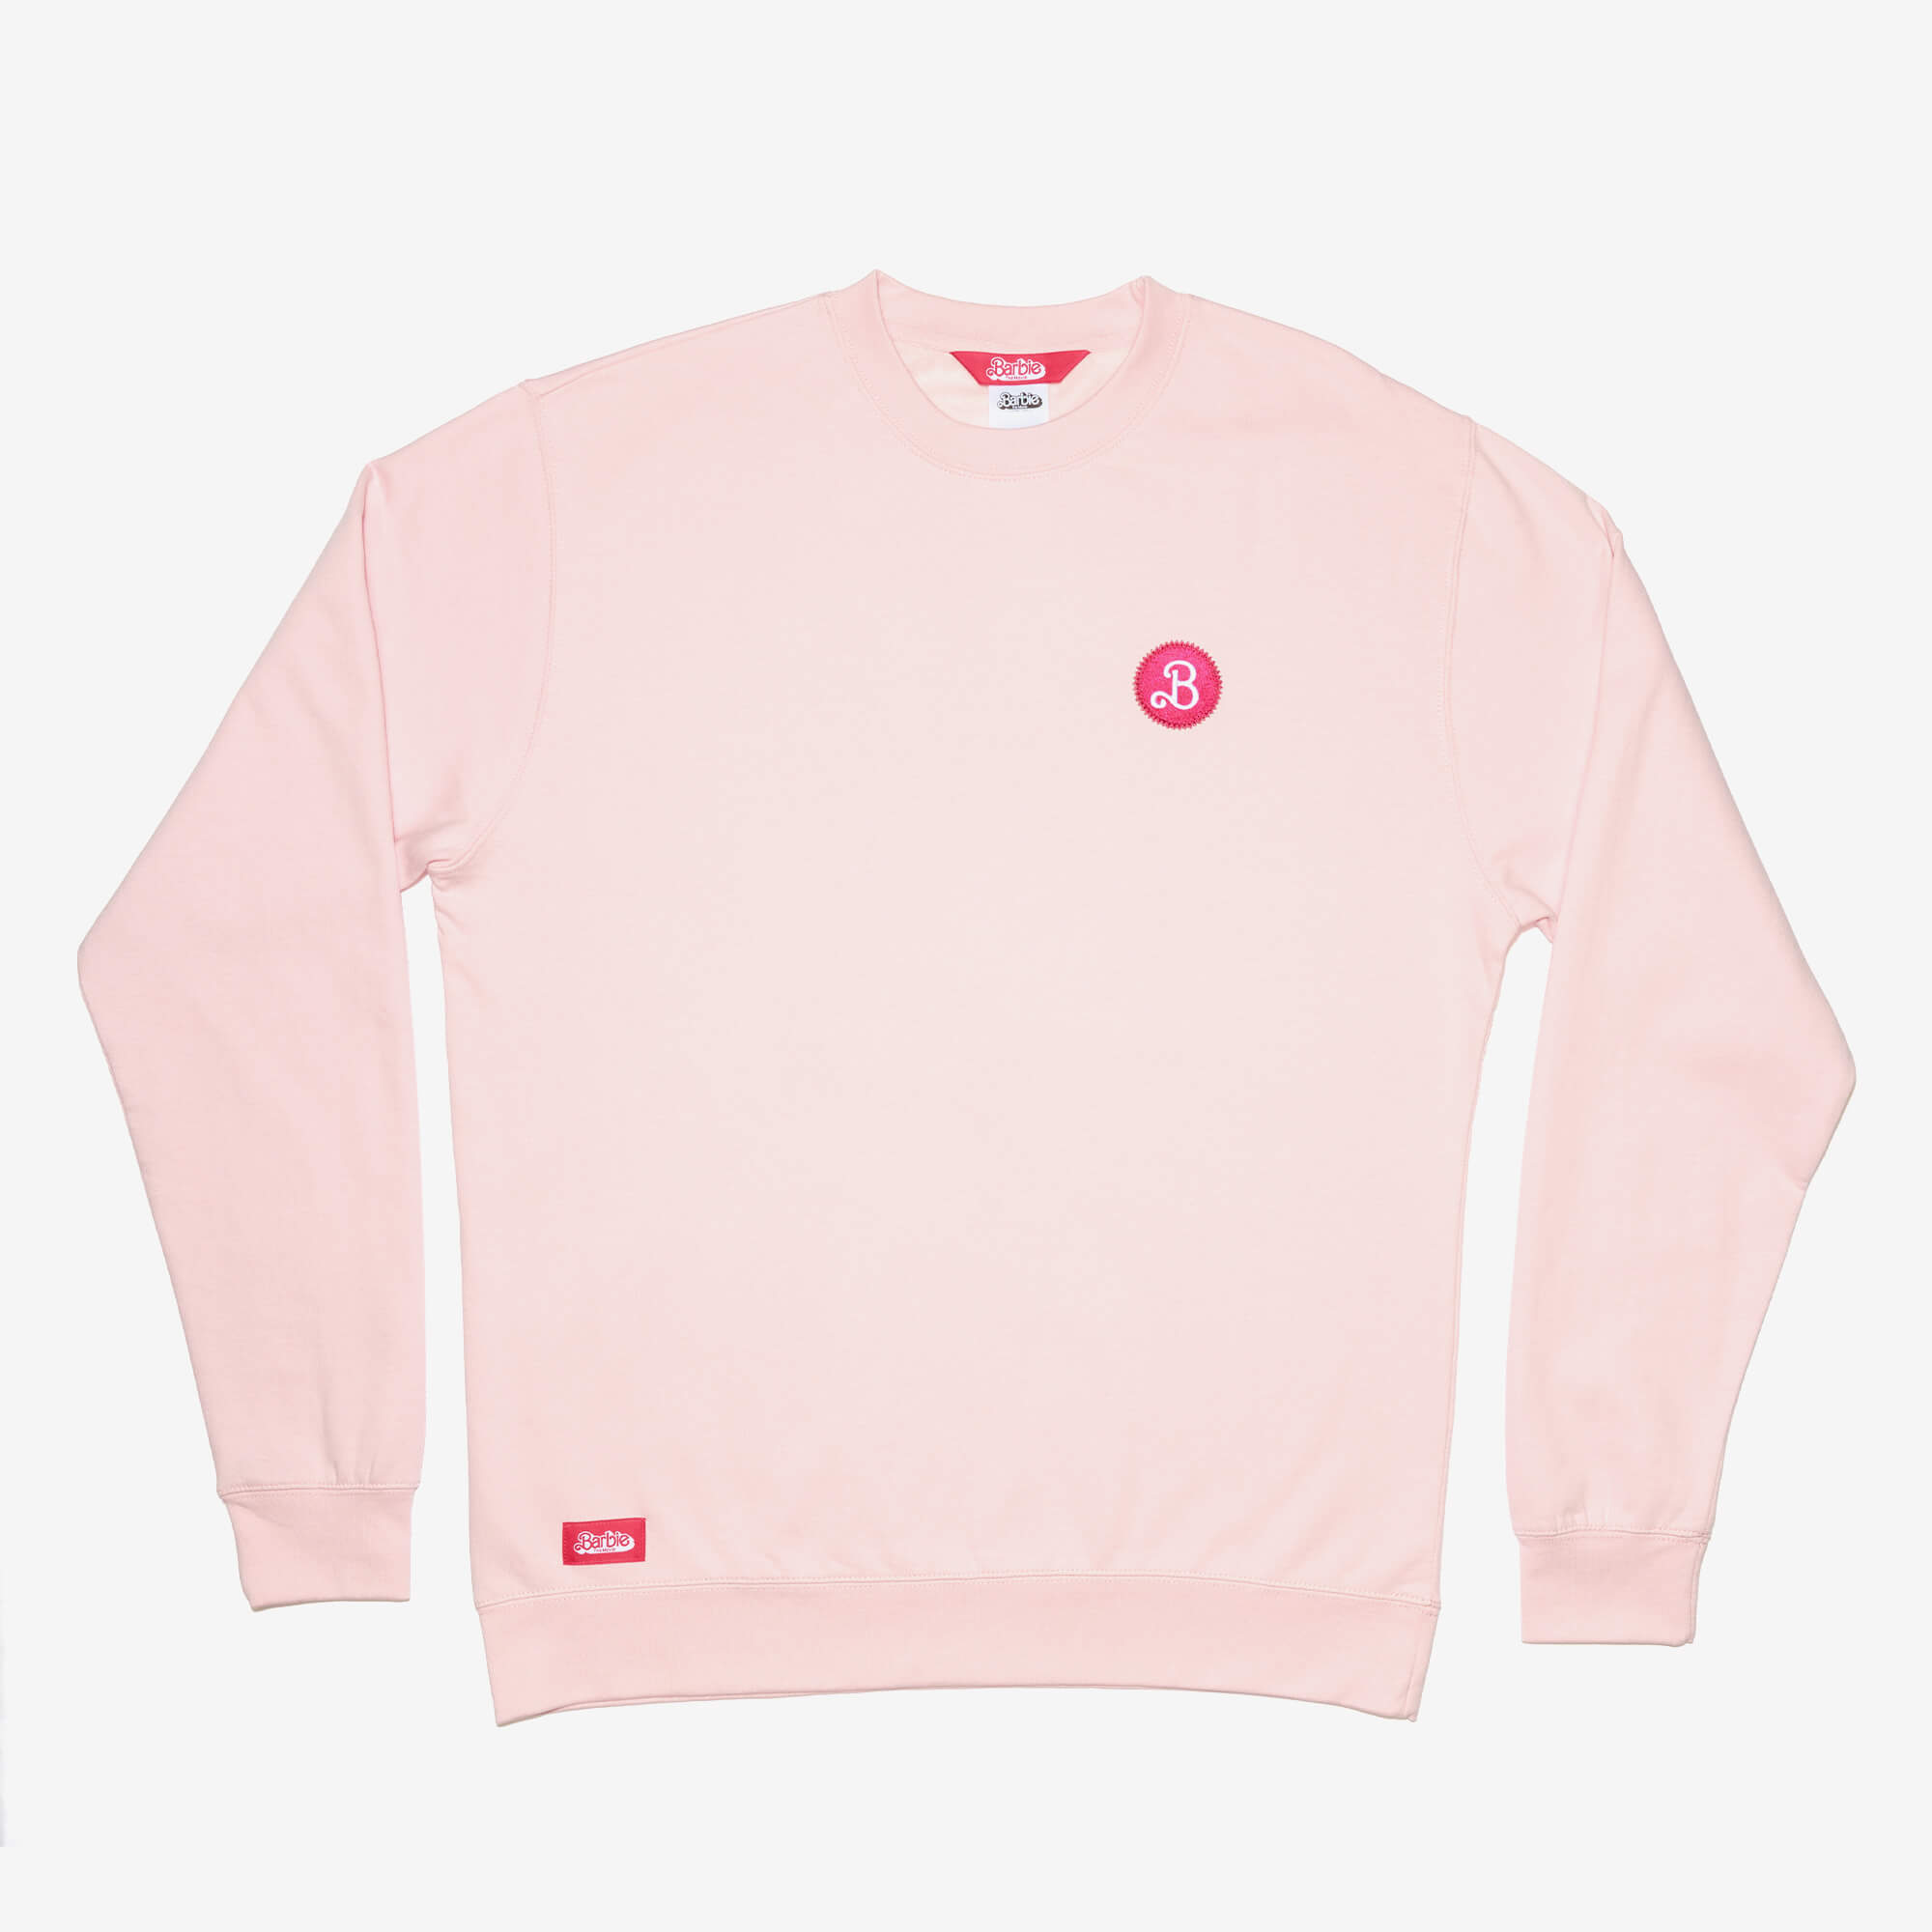 Monogram Sweatshirt, Personalized Sleeve Custom Embroidered